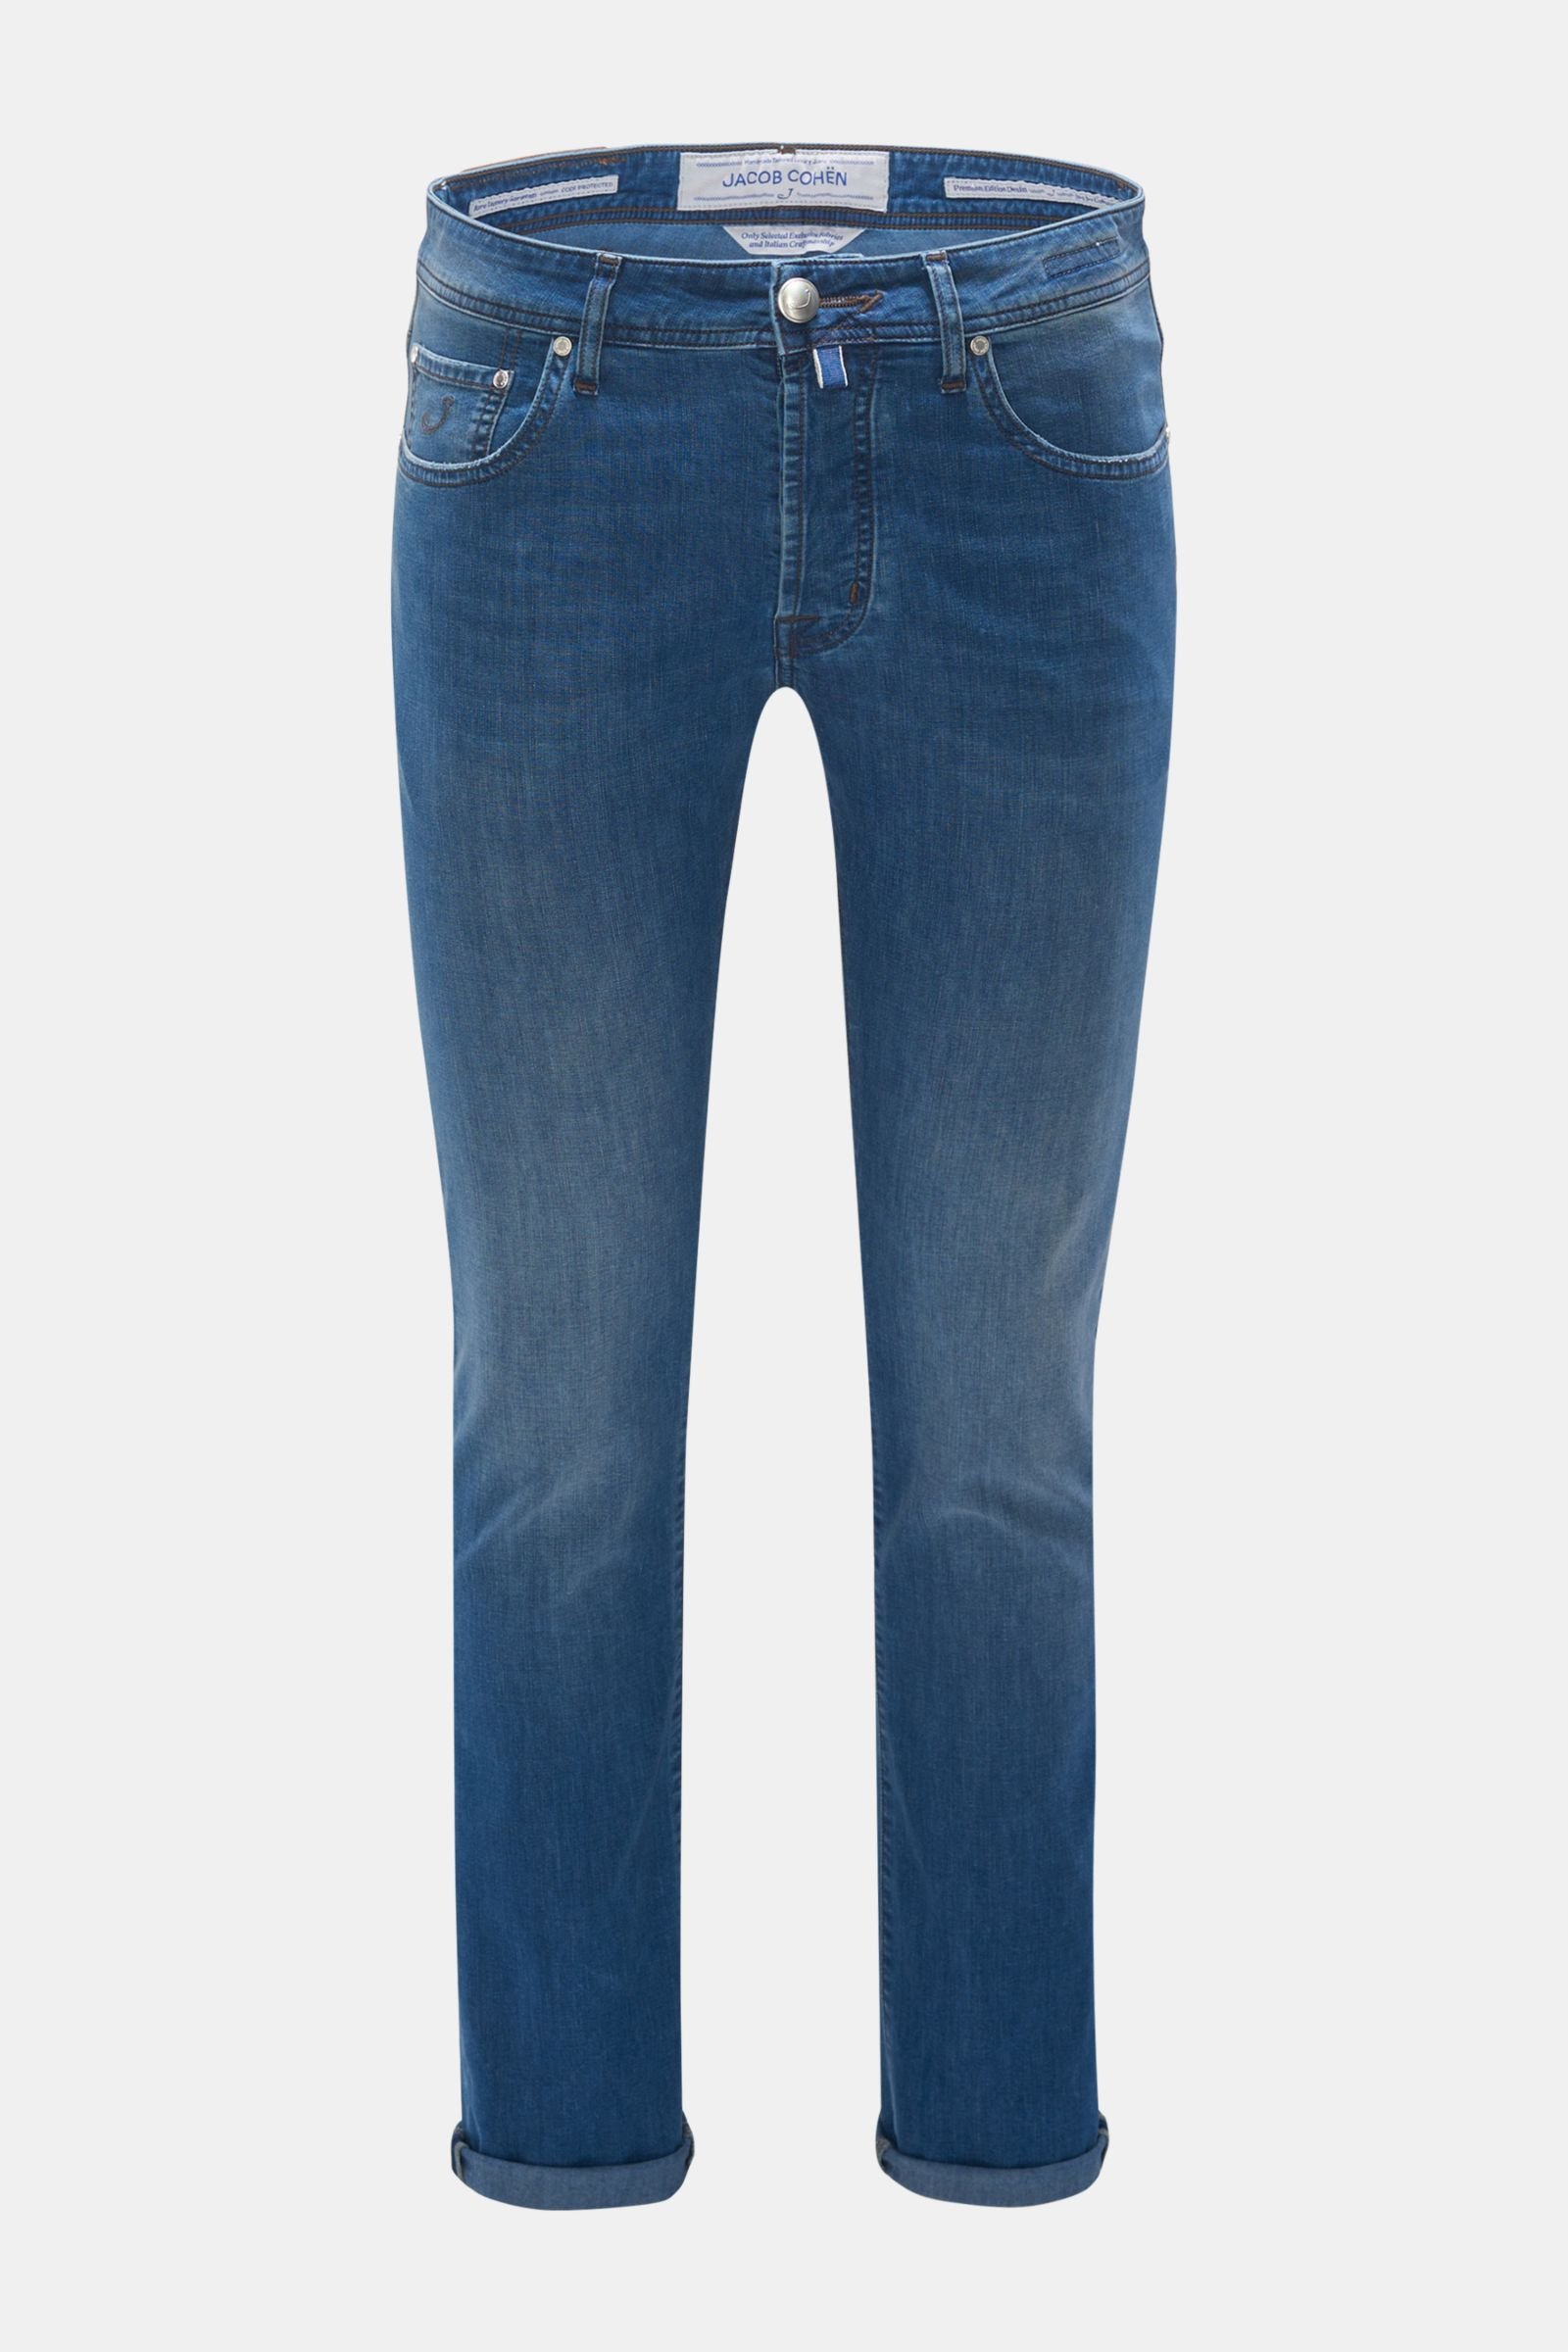 Jeans 'J688 Comfort Extra Slim Fit' grey-blue